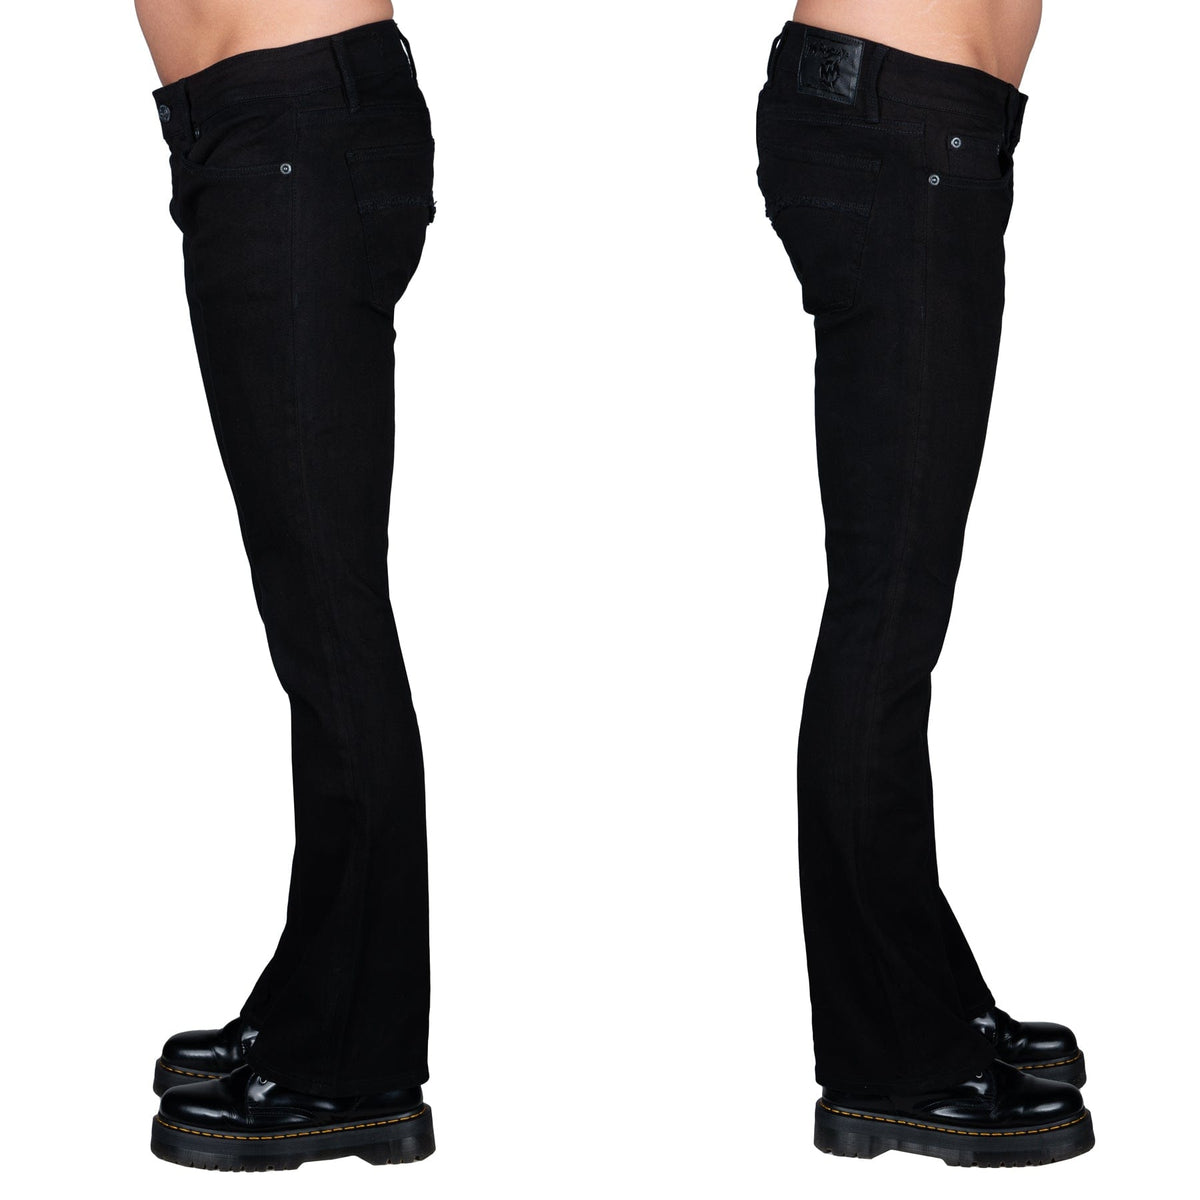 Wornstar Clothing Hellraiser Side Zipper Jeans - Black